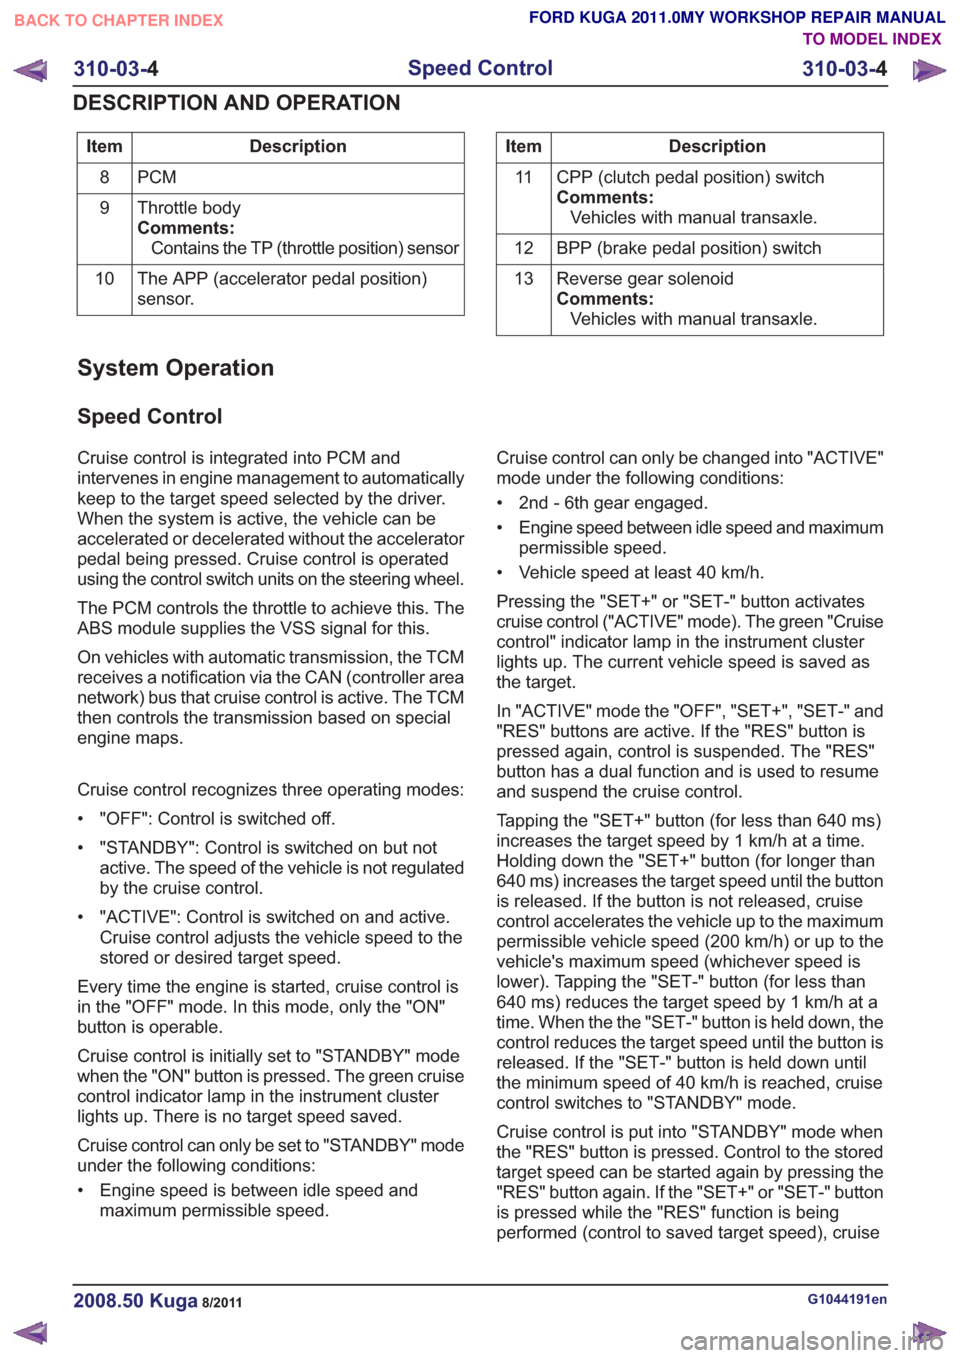 FORD KUGA 2011 1.G Manual PDF Description
Item
PCM
8
Throttle body
Comments:Contains the TP (throttle position) sensor
9
The APP (accelerator pedal position)
sensor.
10Description
Item
CPP (clutch pedal position) switch
Comments:V